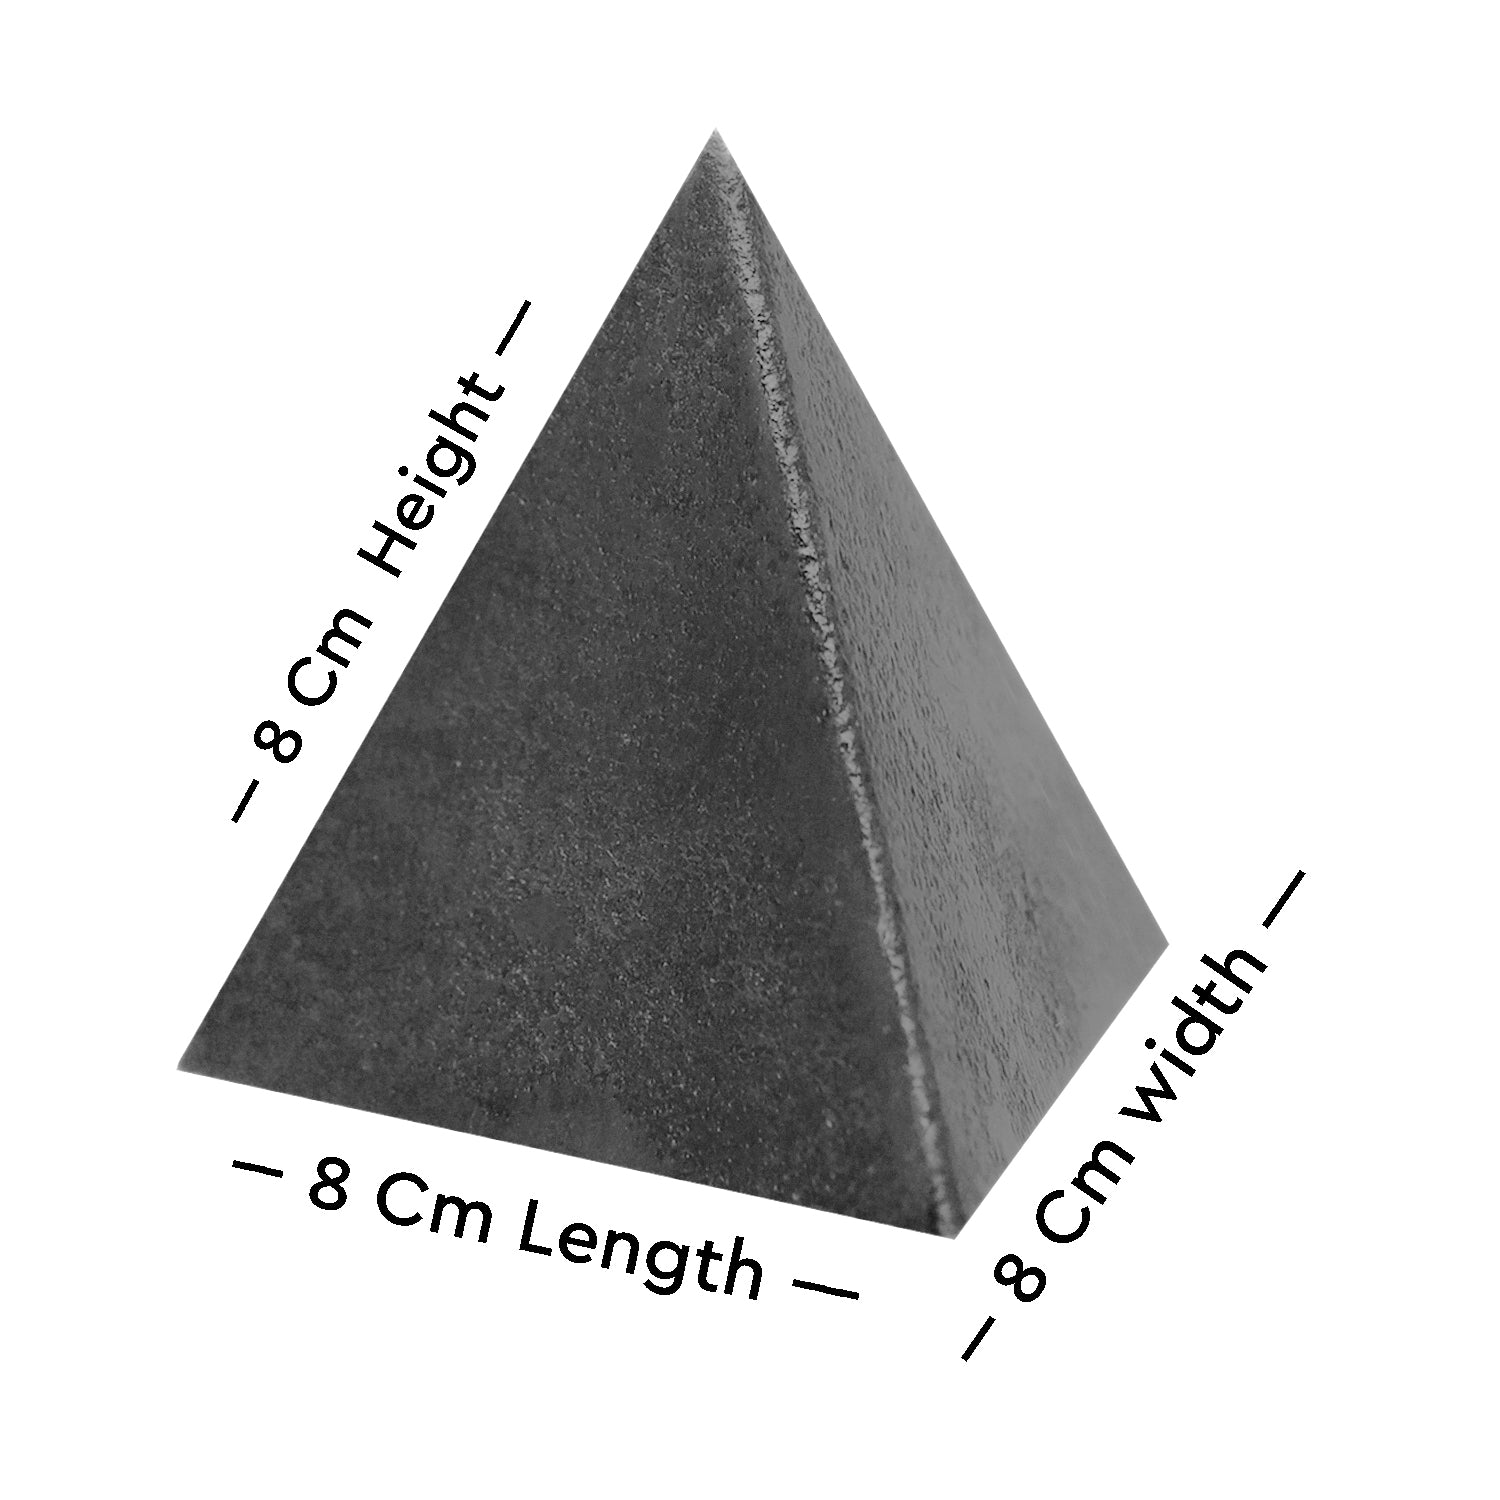 Iron Triangular Pyramid 500G - vastu-vigyan